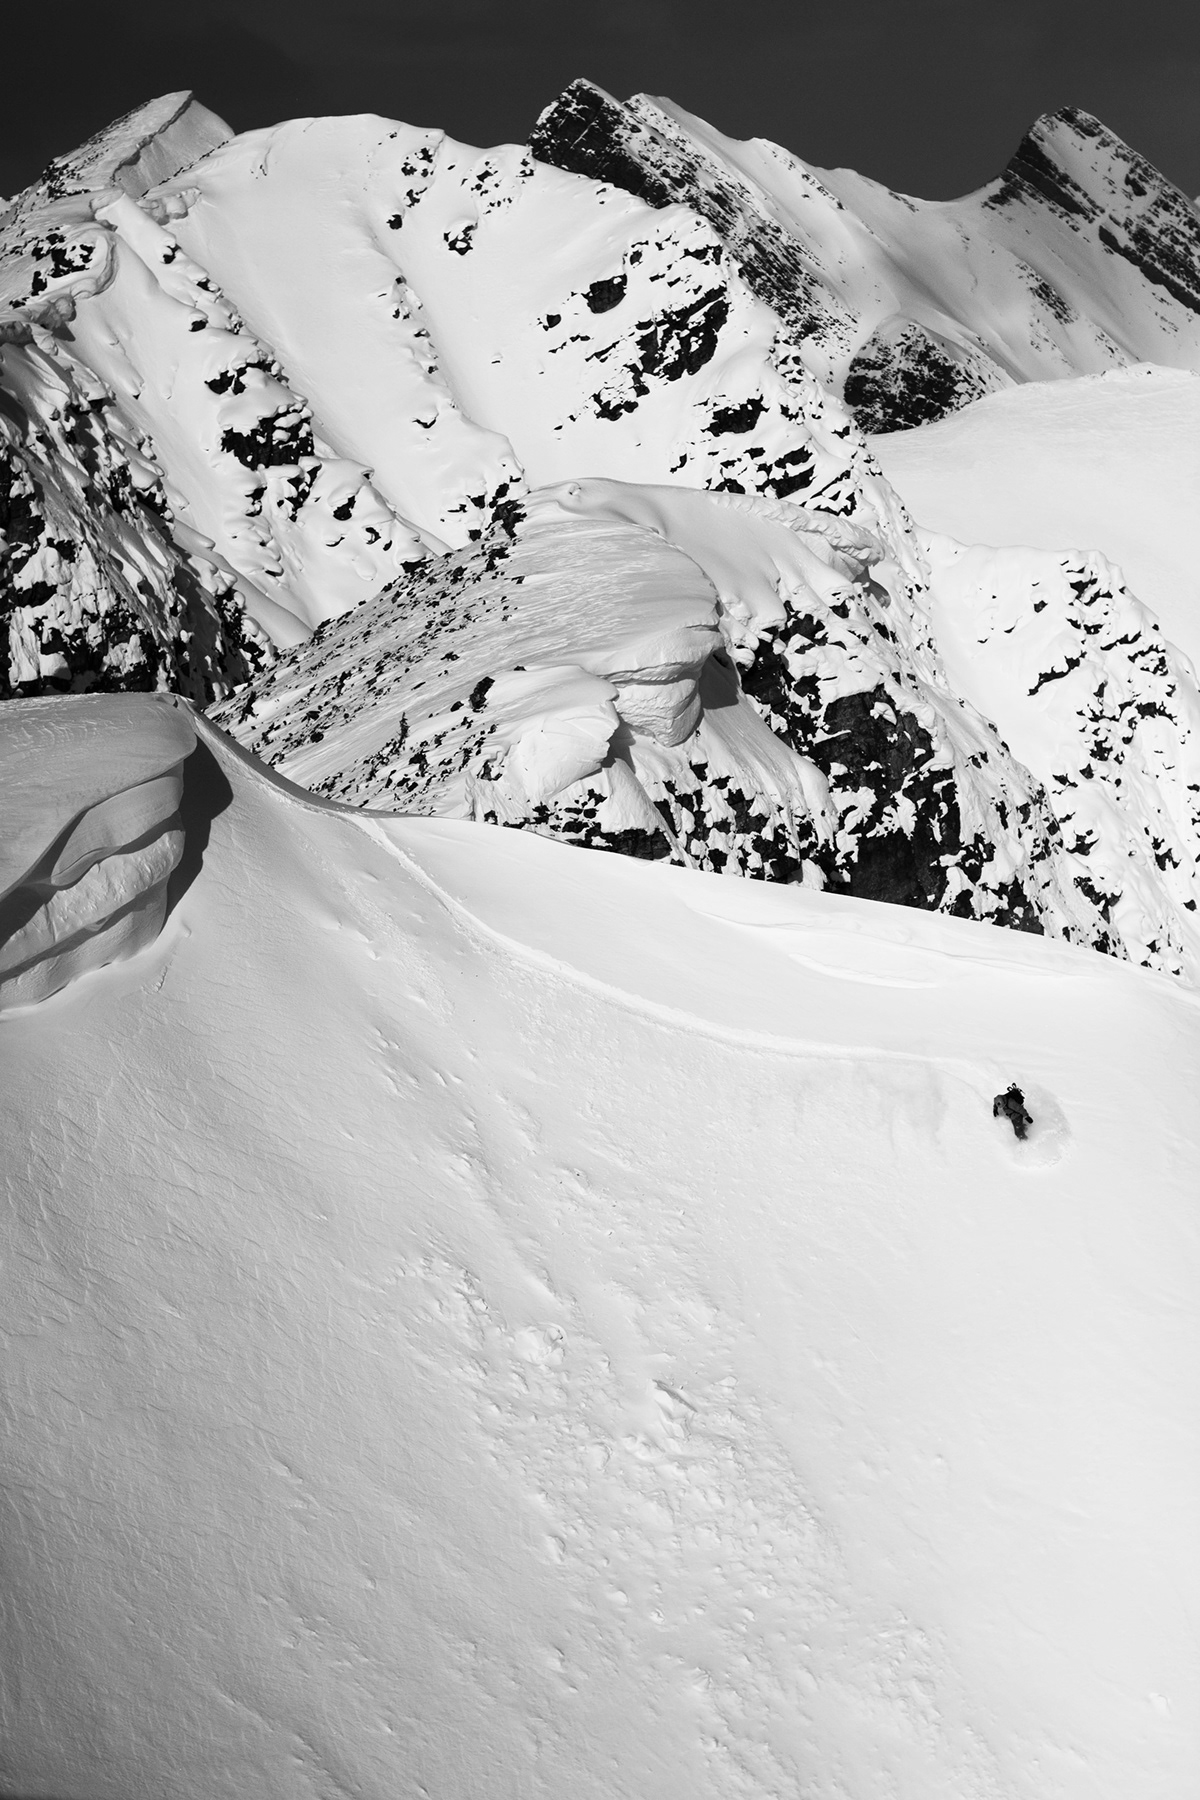 snowboard Snowboarding skiing mountains snow adventure photo Landscape peak Kicking Horse are